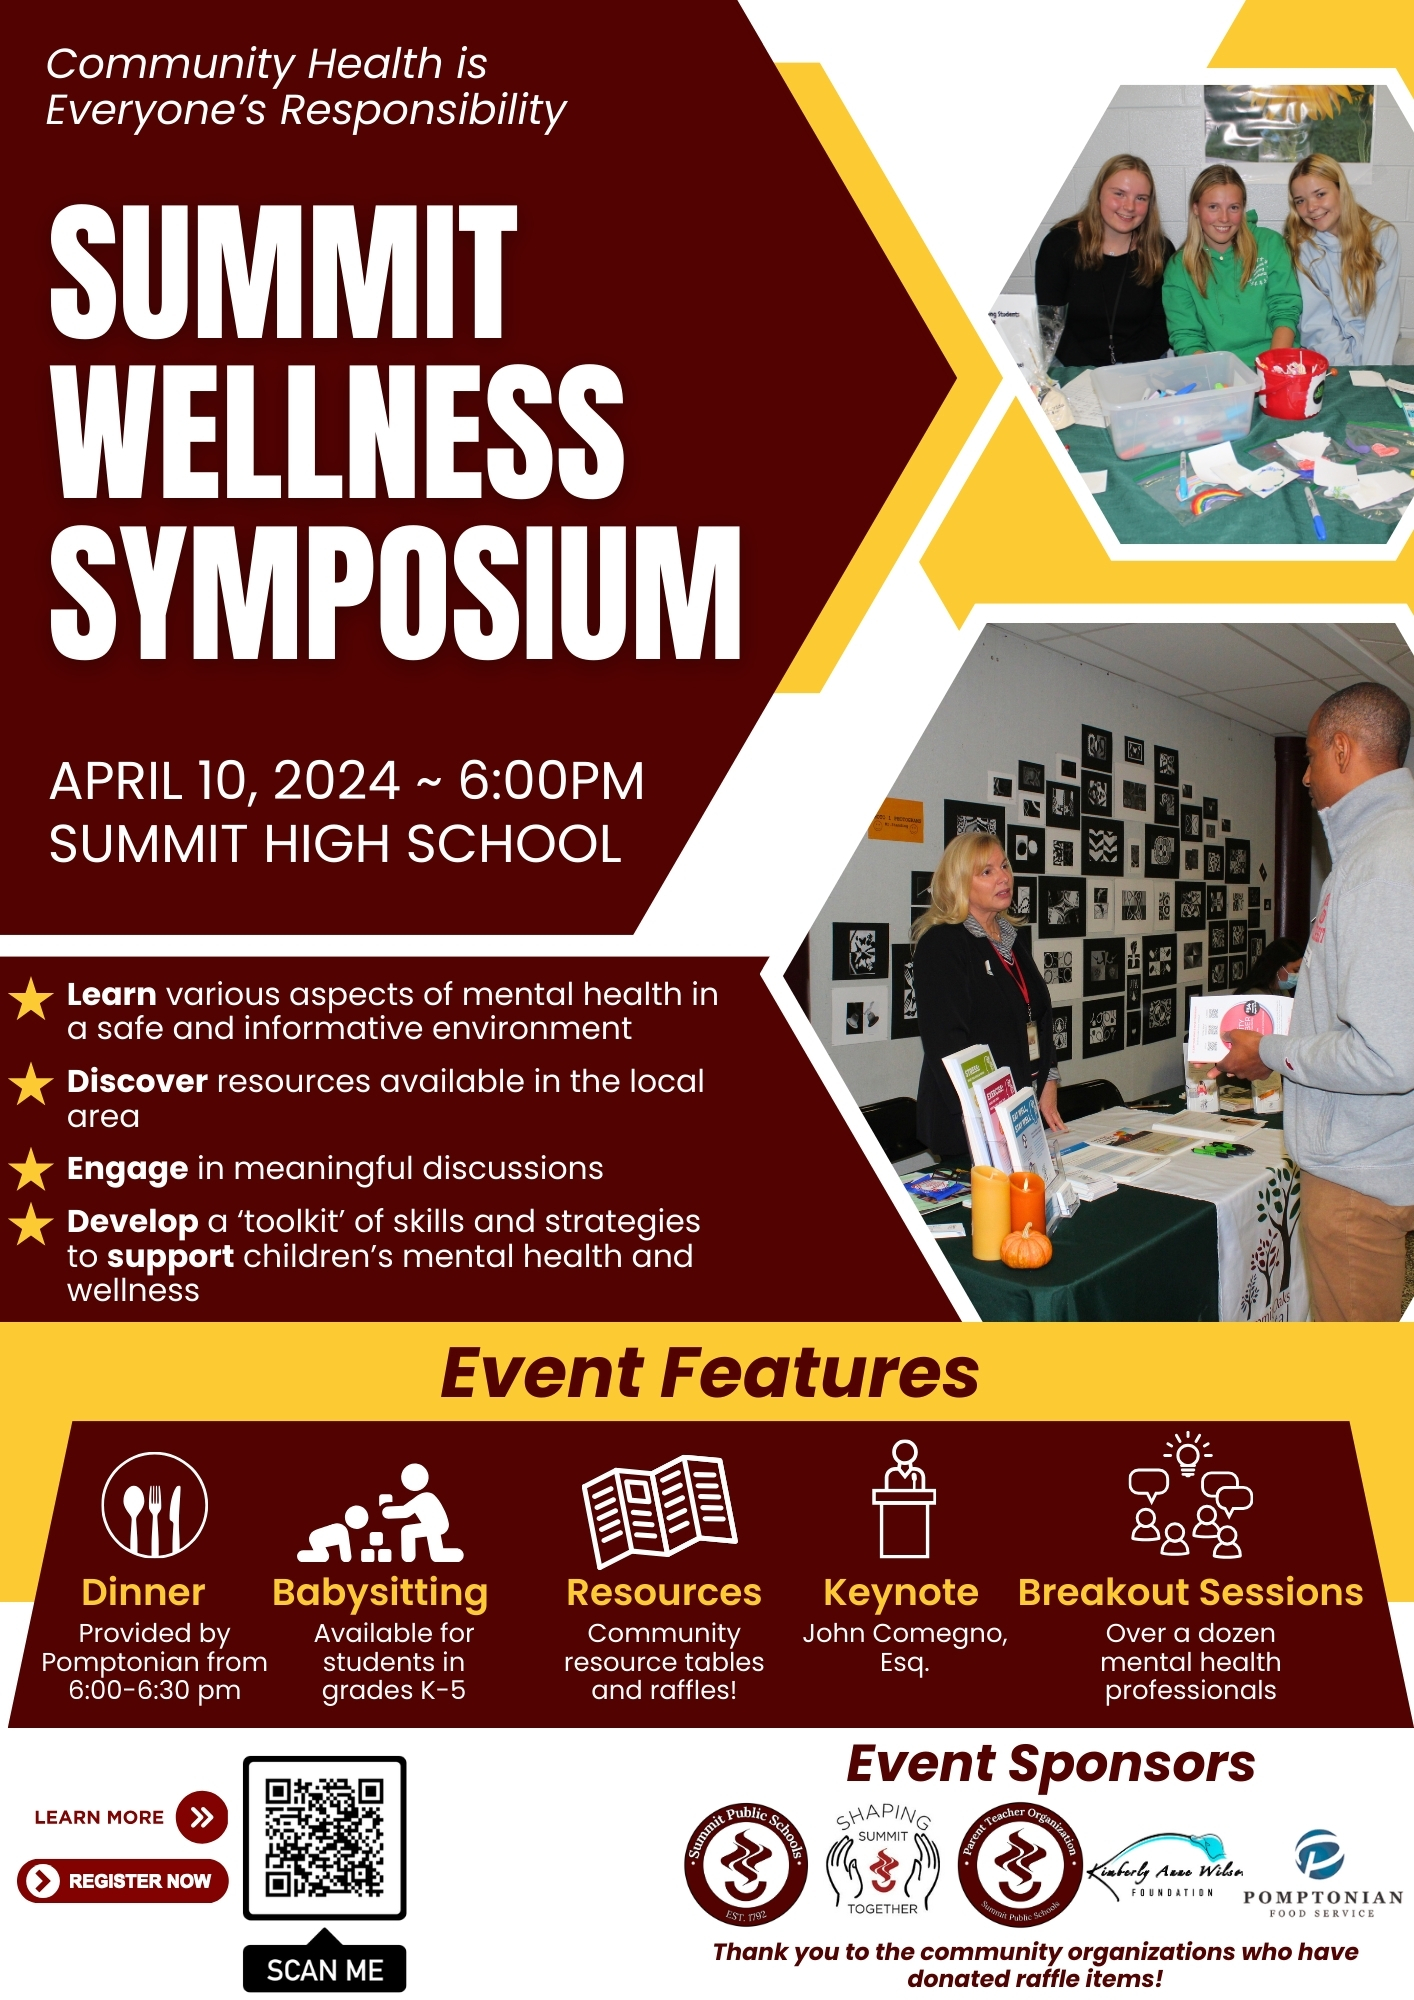 Inaugural Summit Wellness Symposium set for April 10th